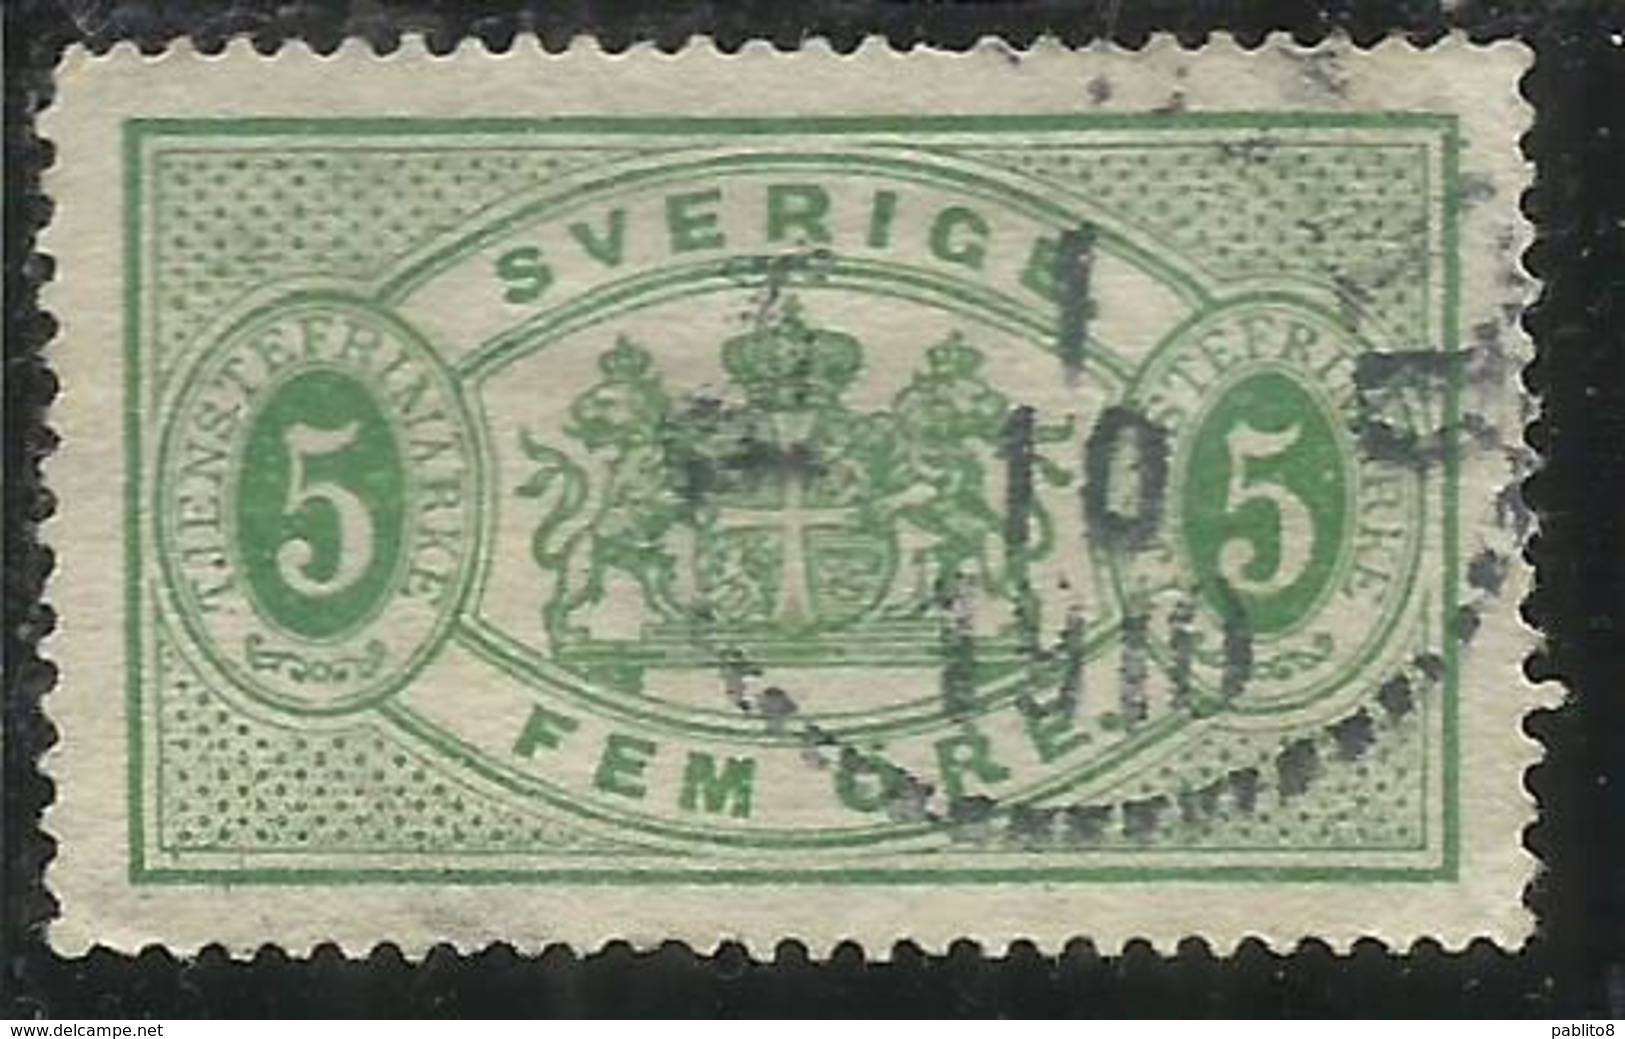 SWEDEN SVERIGE SVEZIA SUEDE 1881 1895 OFFICIAL STAMPS ORE 5o USATO USED OBLITERE' - Revenue Stamps